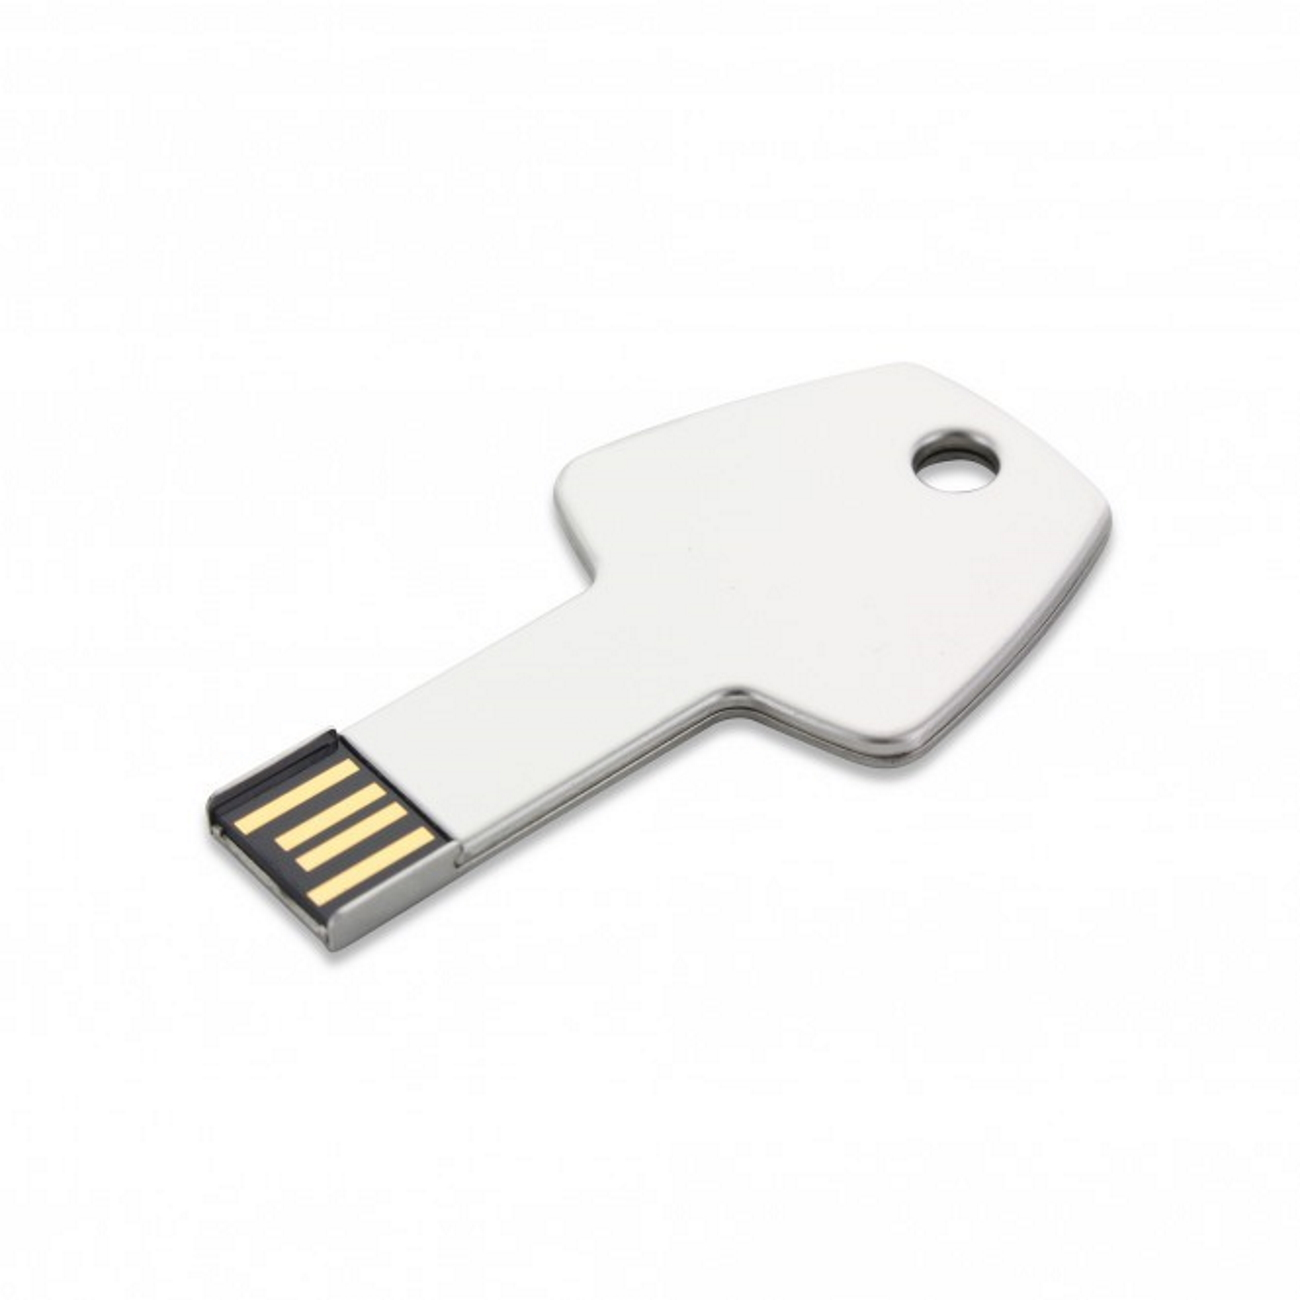 USB GERMANY ®Schlüssel 32 Key GB) USB-Stick (Silber